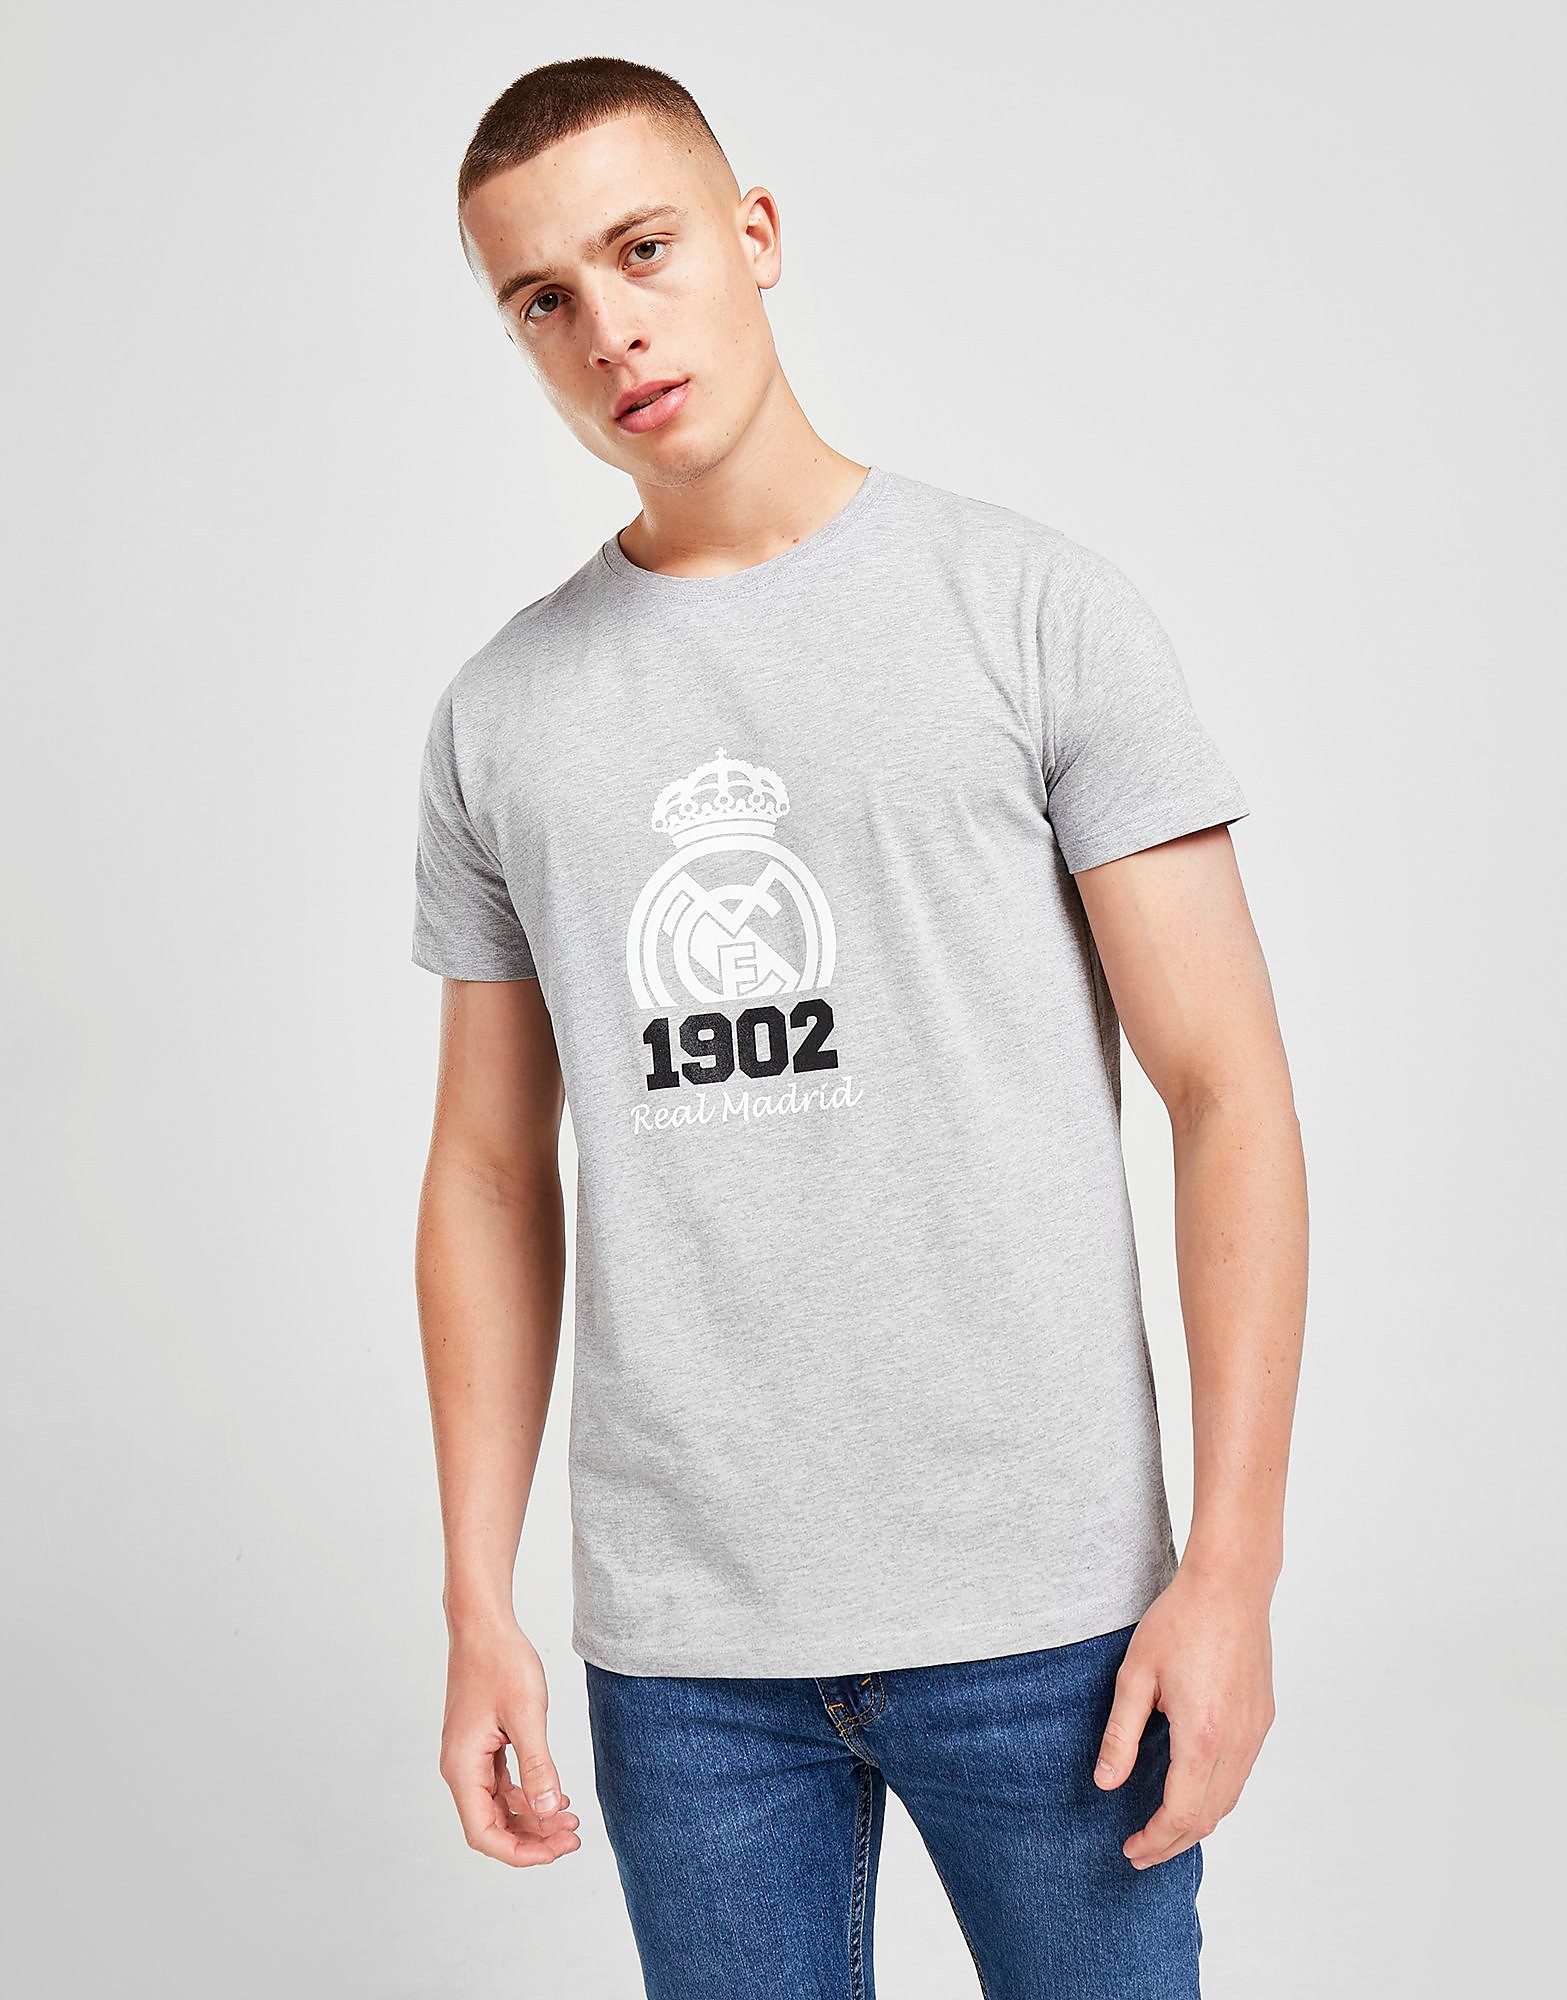 Official Team T-Shirt Real Madrid 1902 - Cinzento - Mens, Cinzento